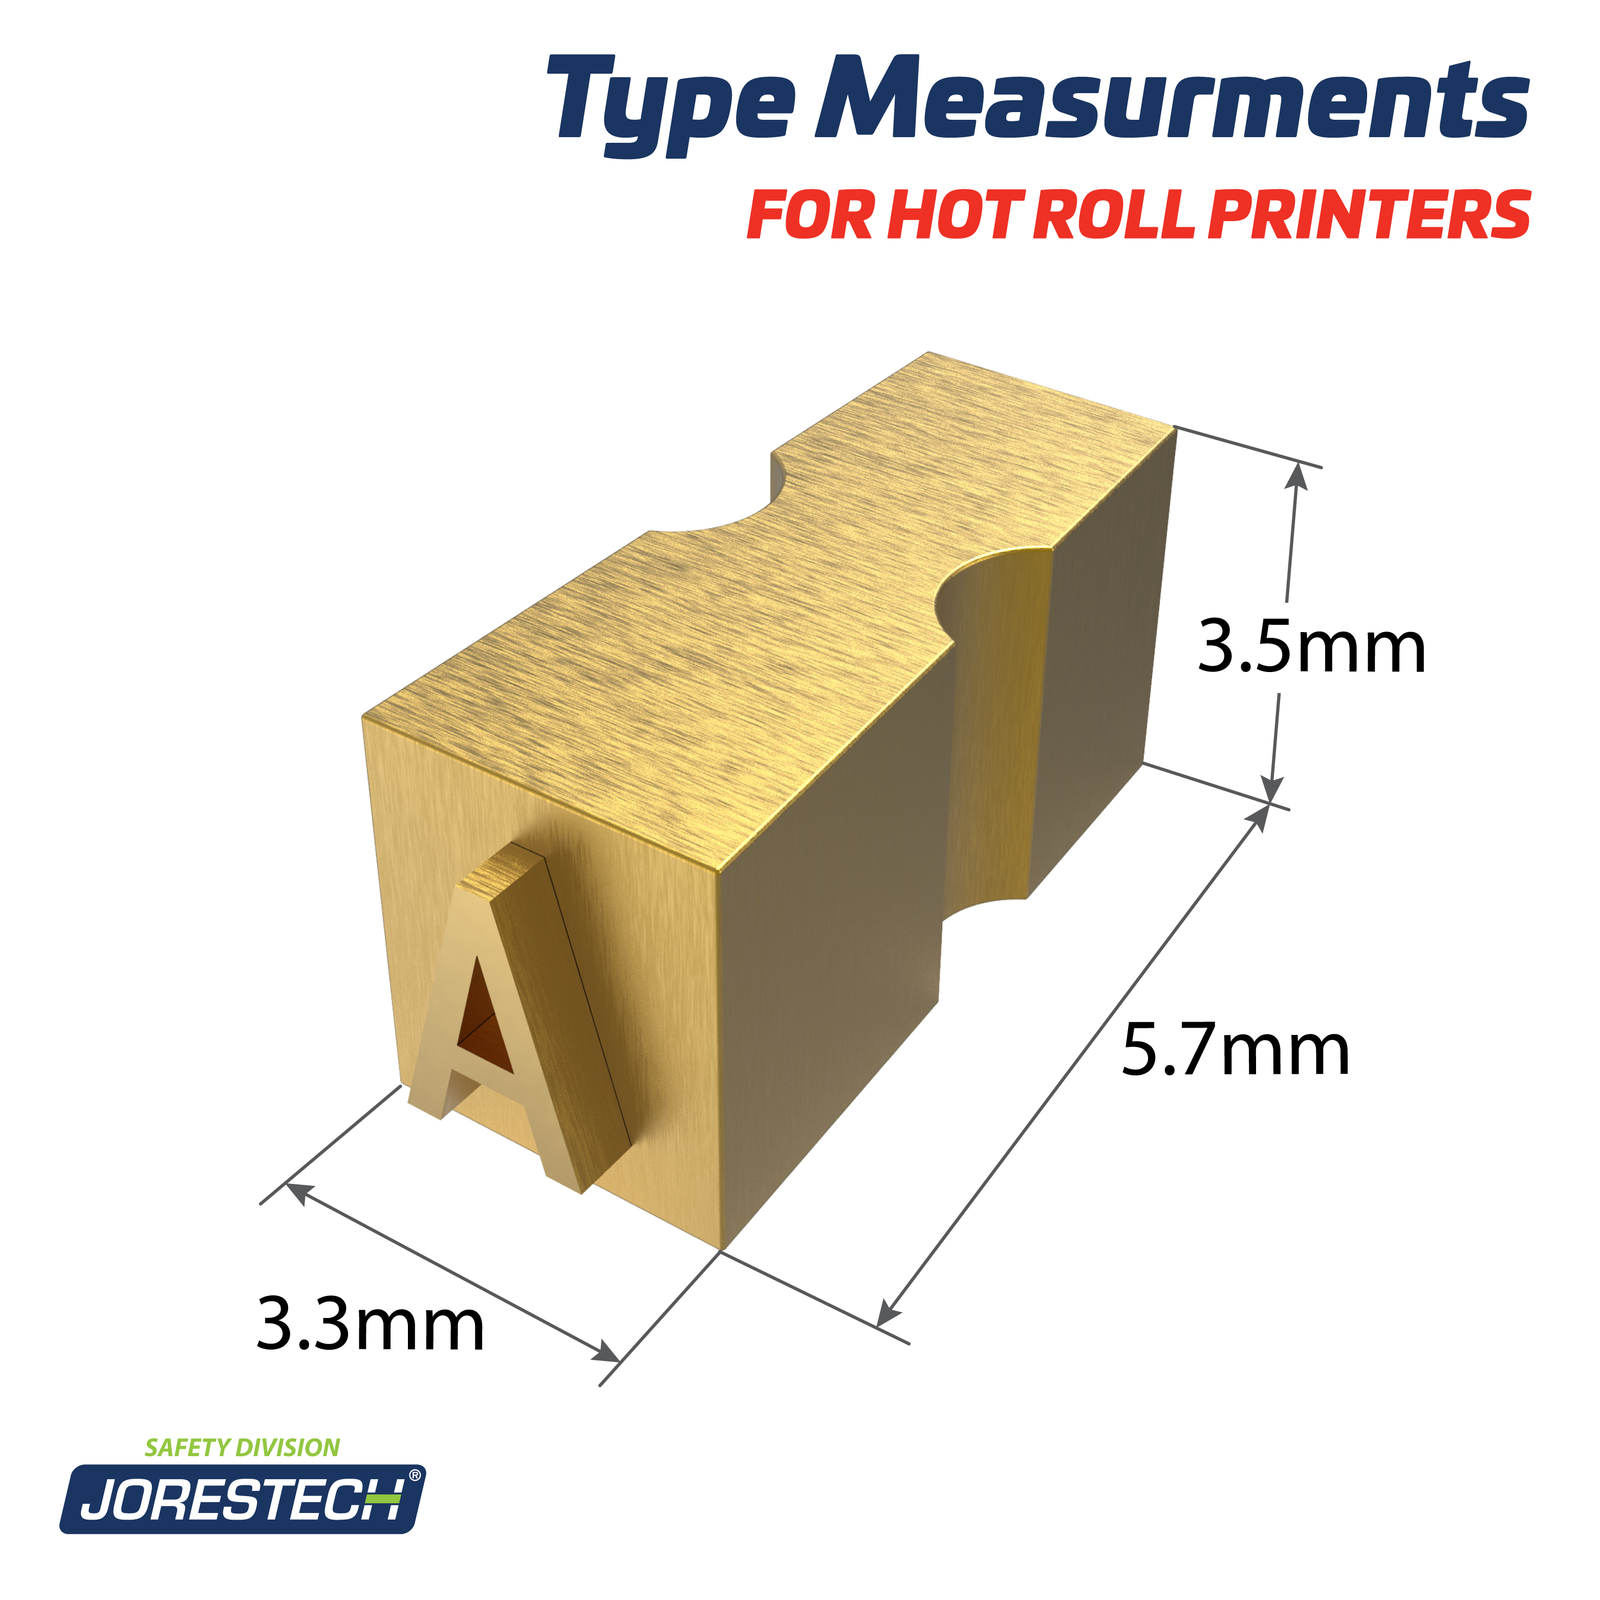 Type measurements: 3.3 mm, 5.7mm, 3.5mm